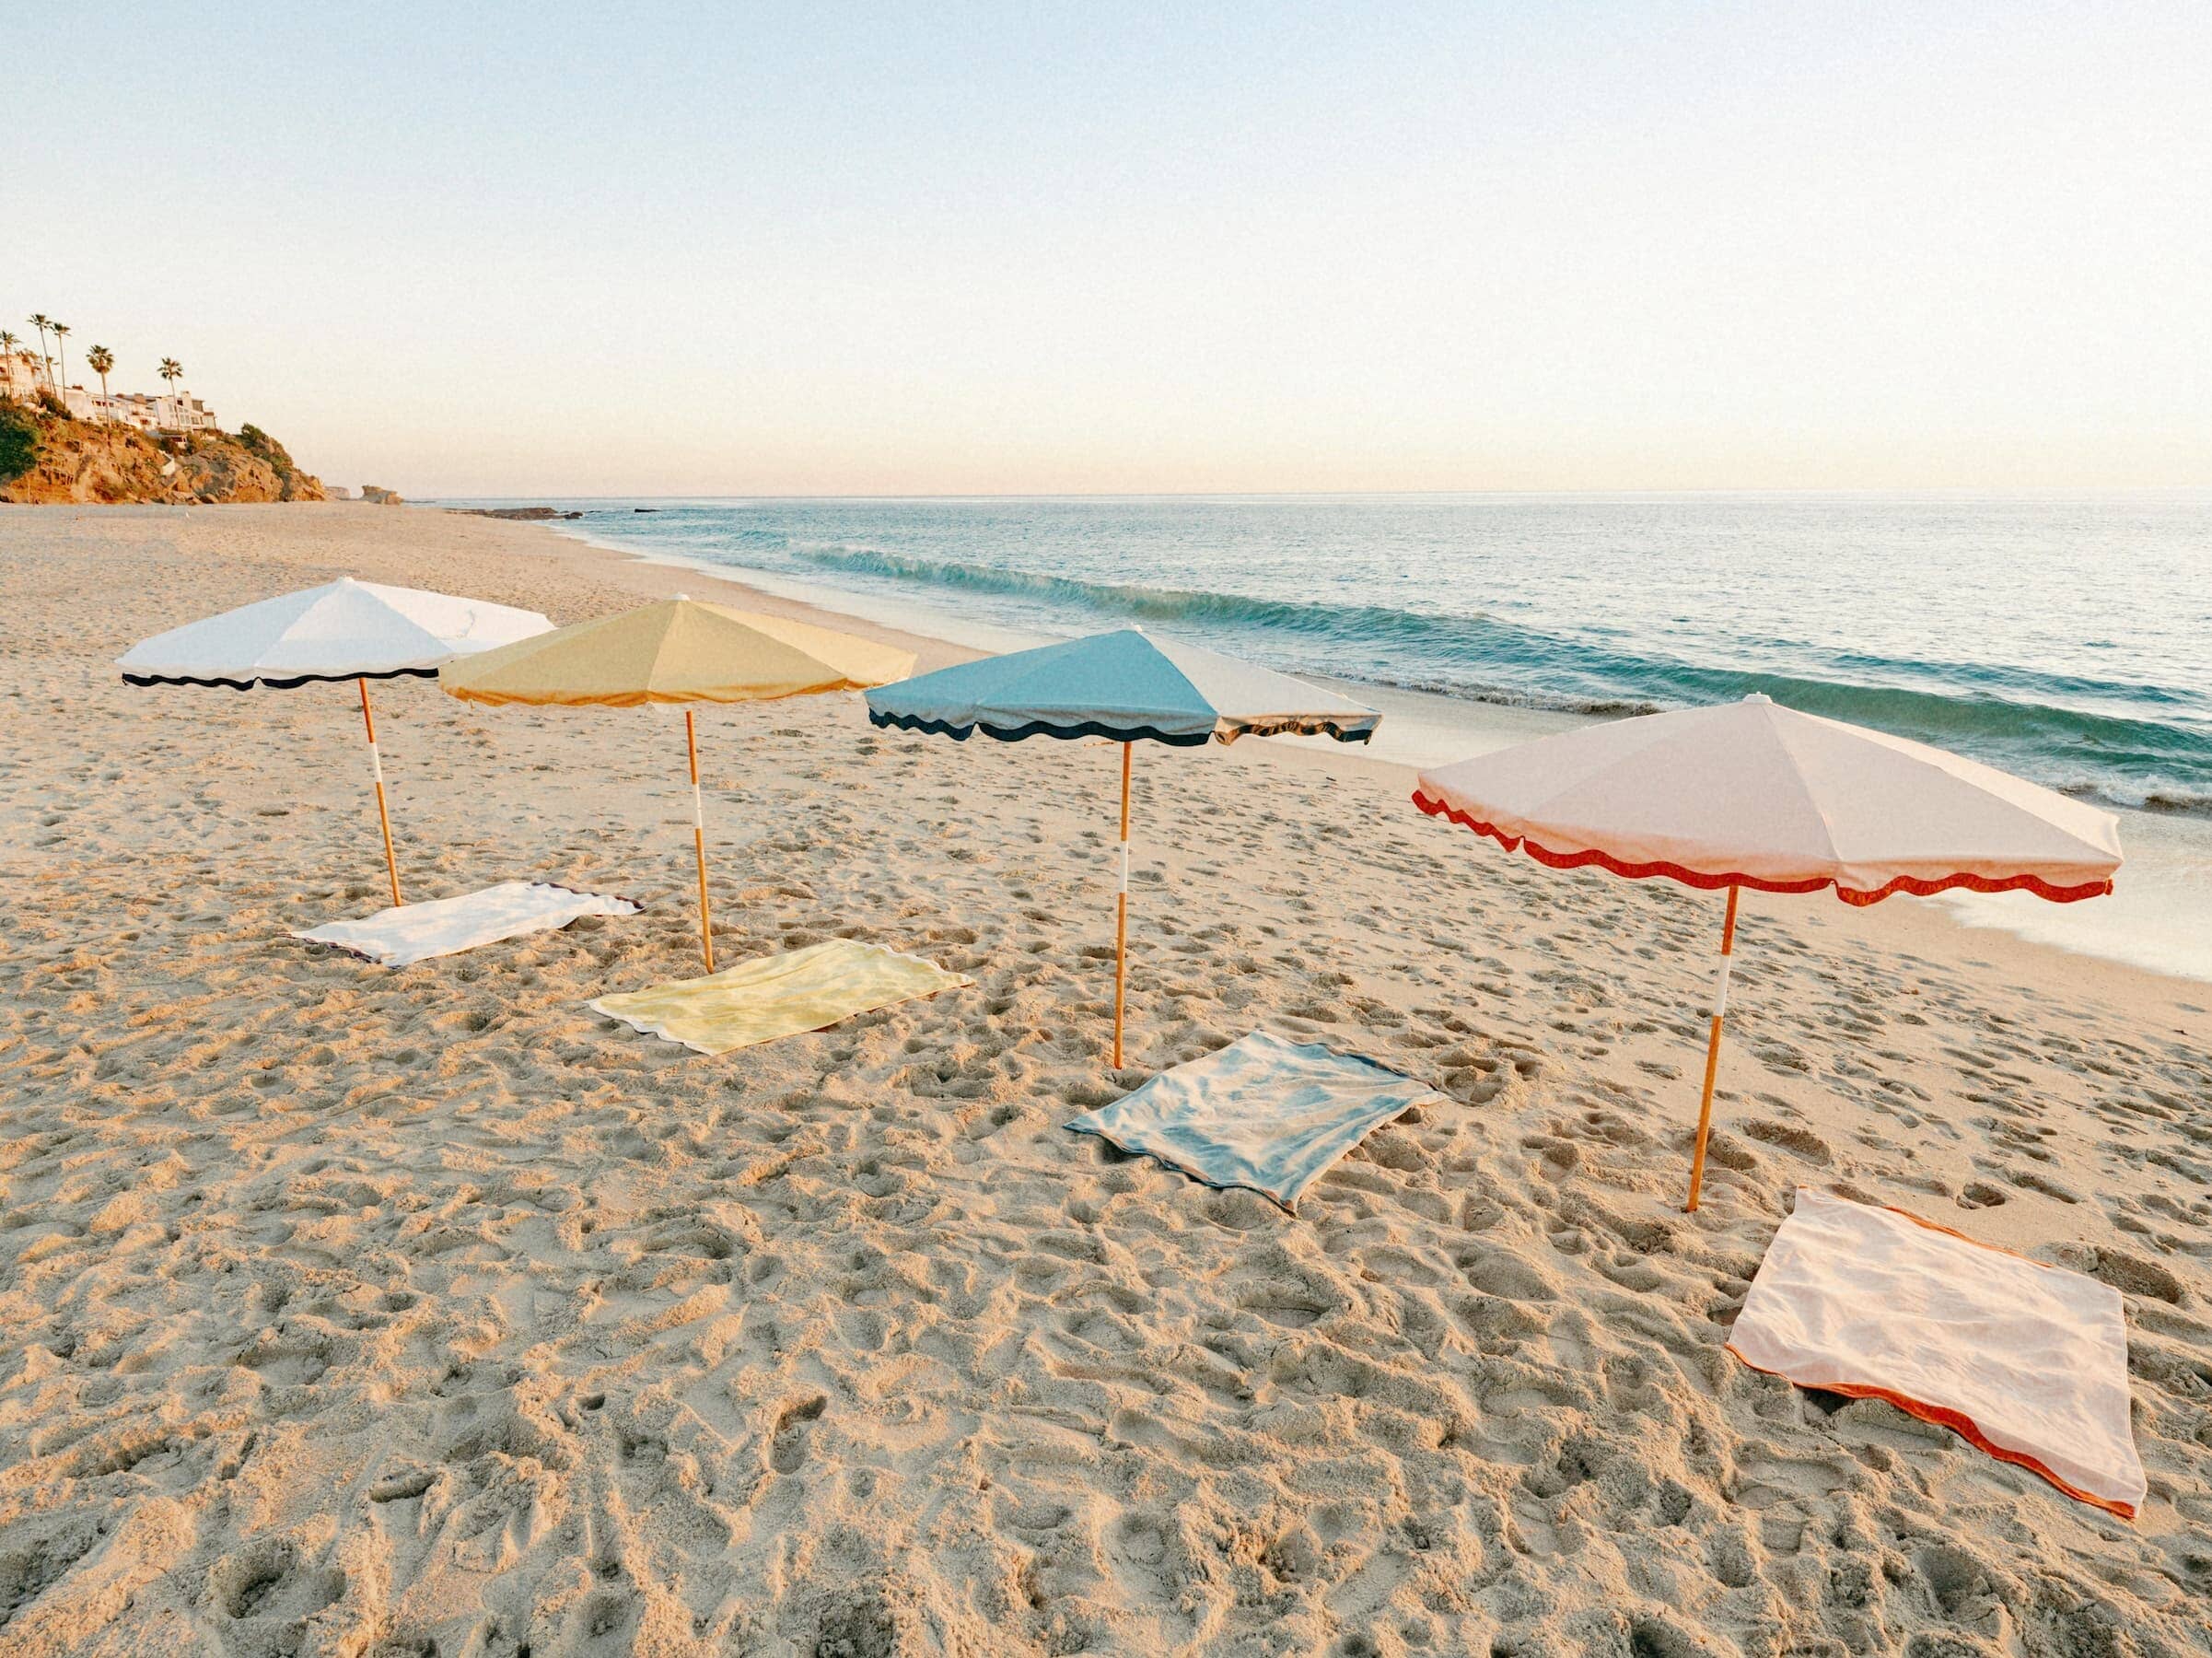 All four amalfi riviera umbrellas on the beach